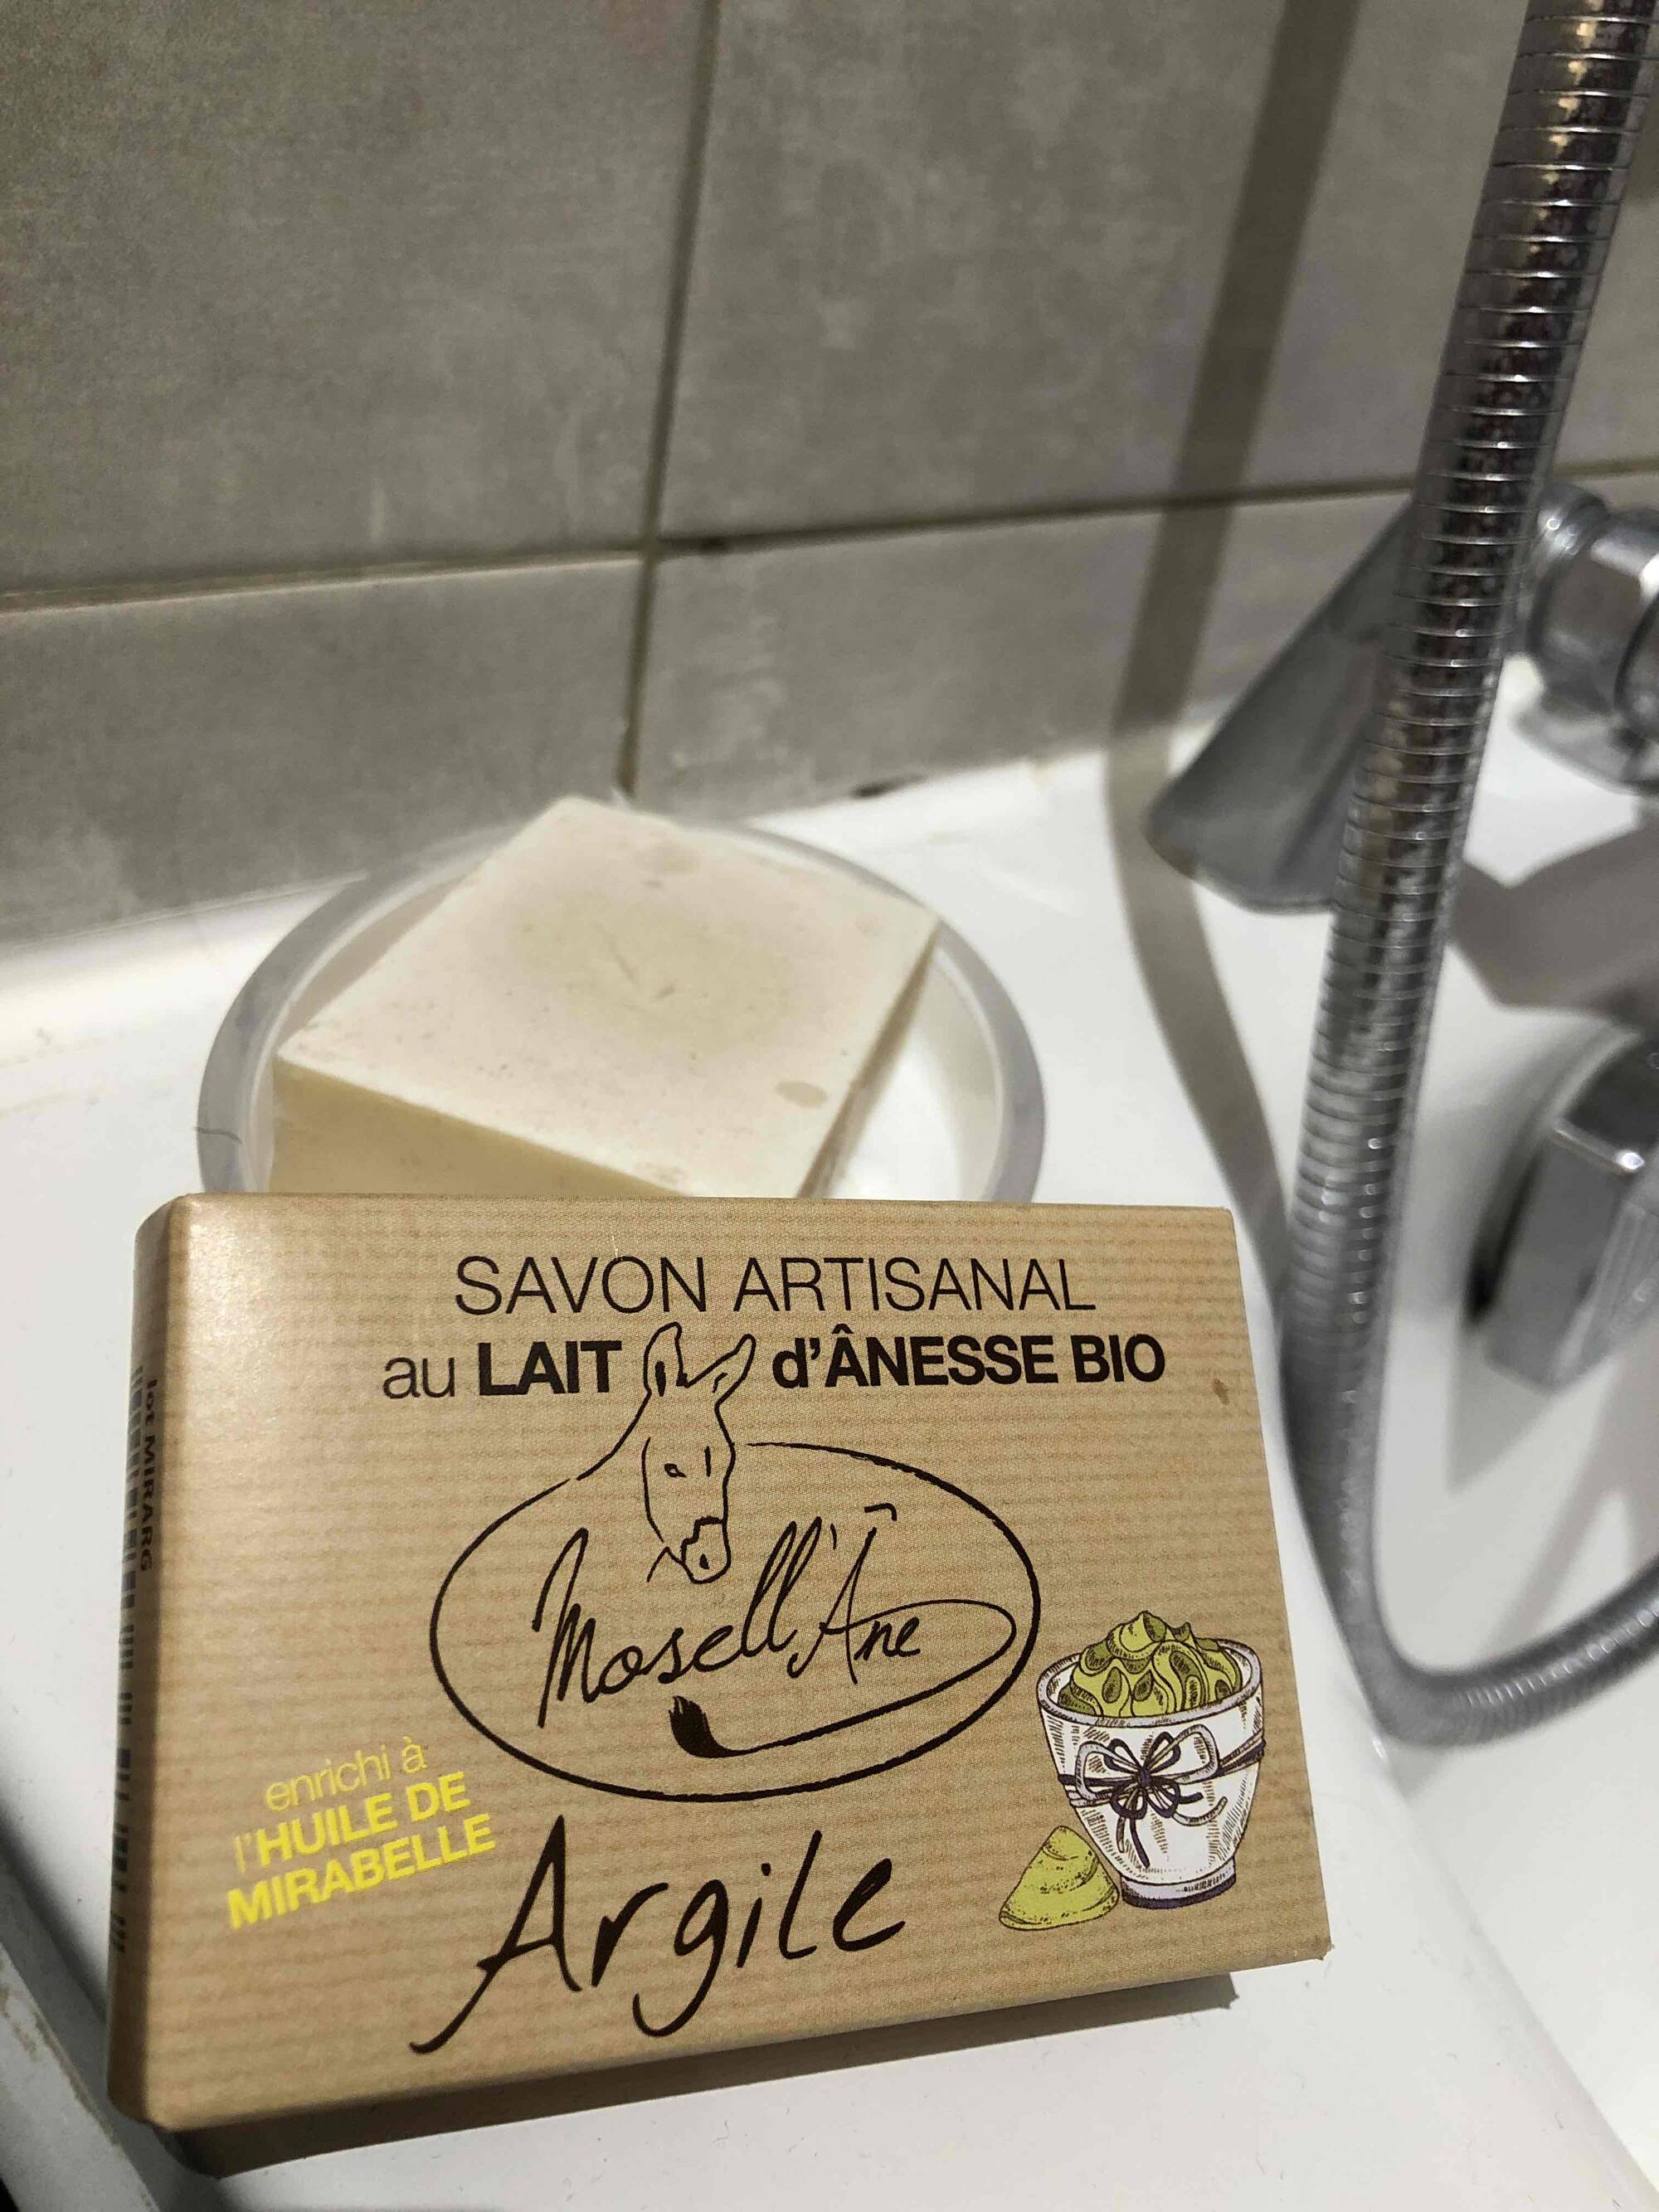 MOSELL'ÂNE - Argile - Savon artisanal au lait d’ânesse bio